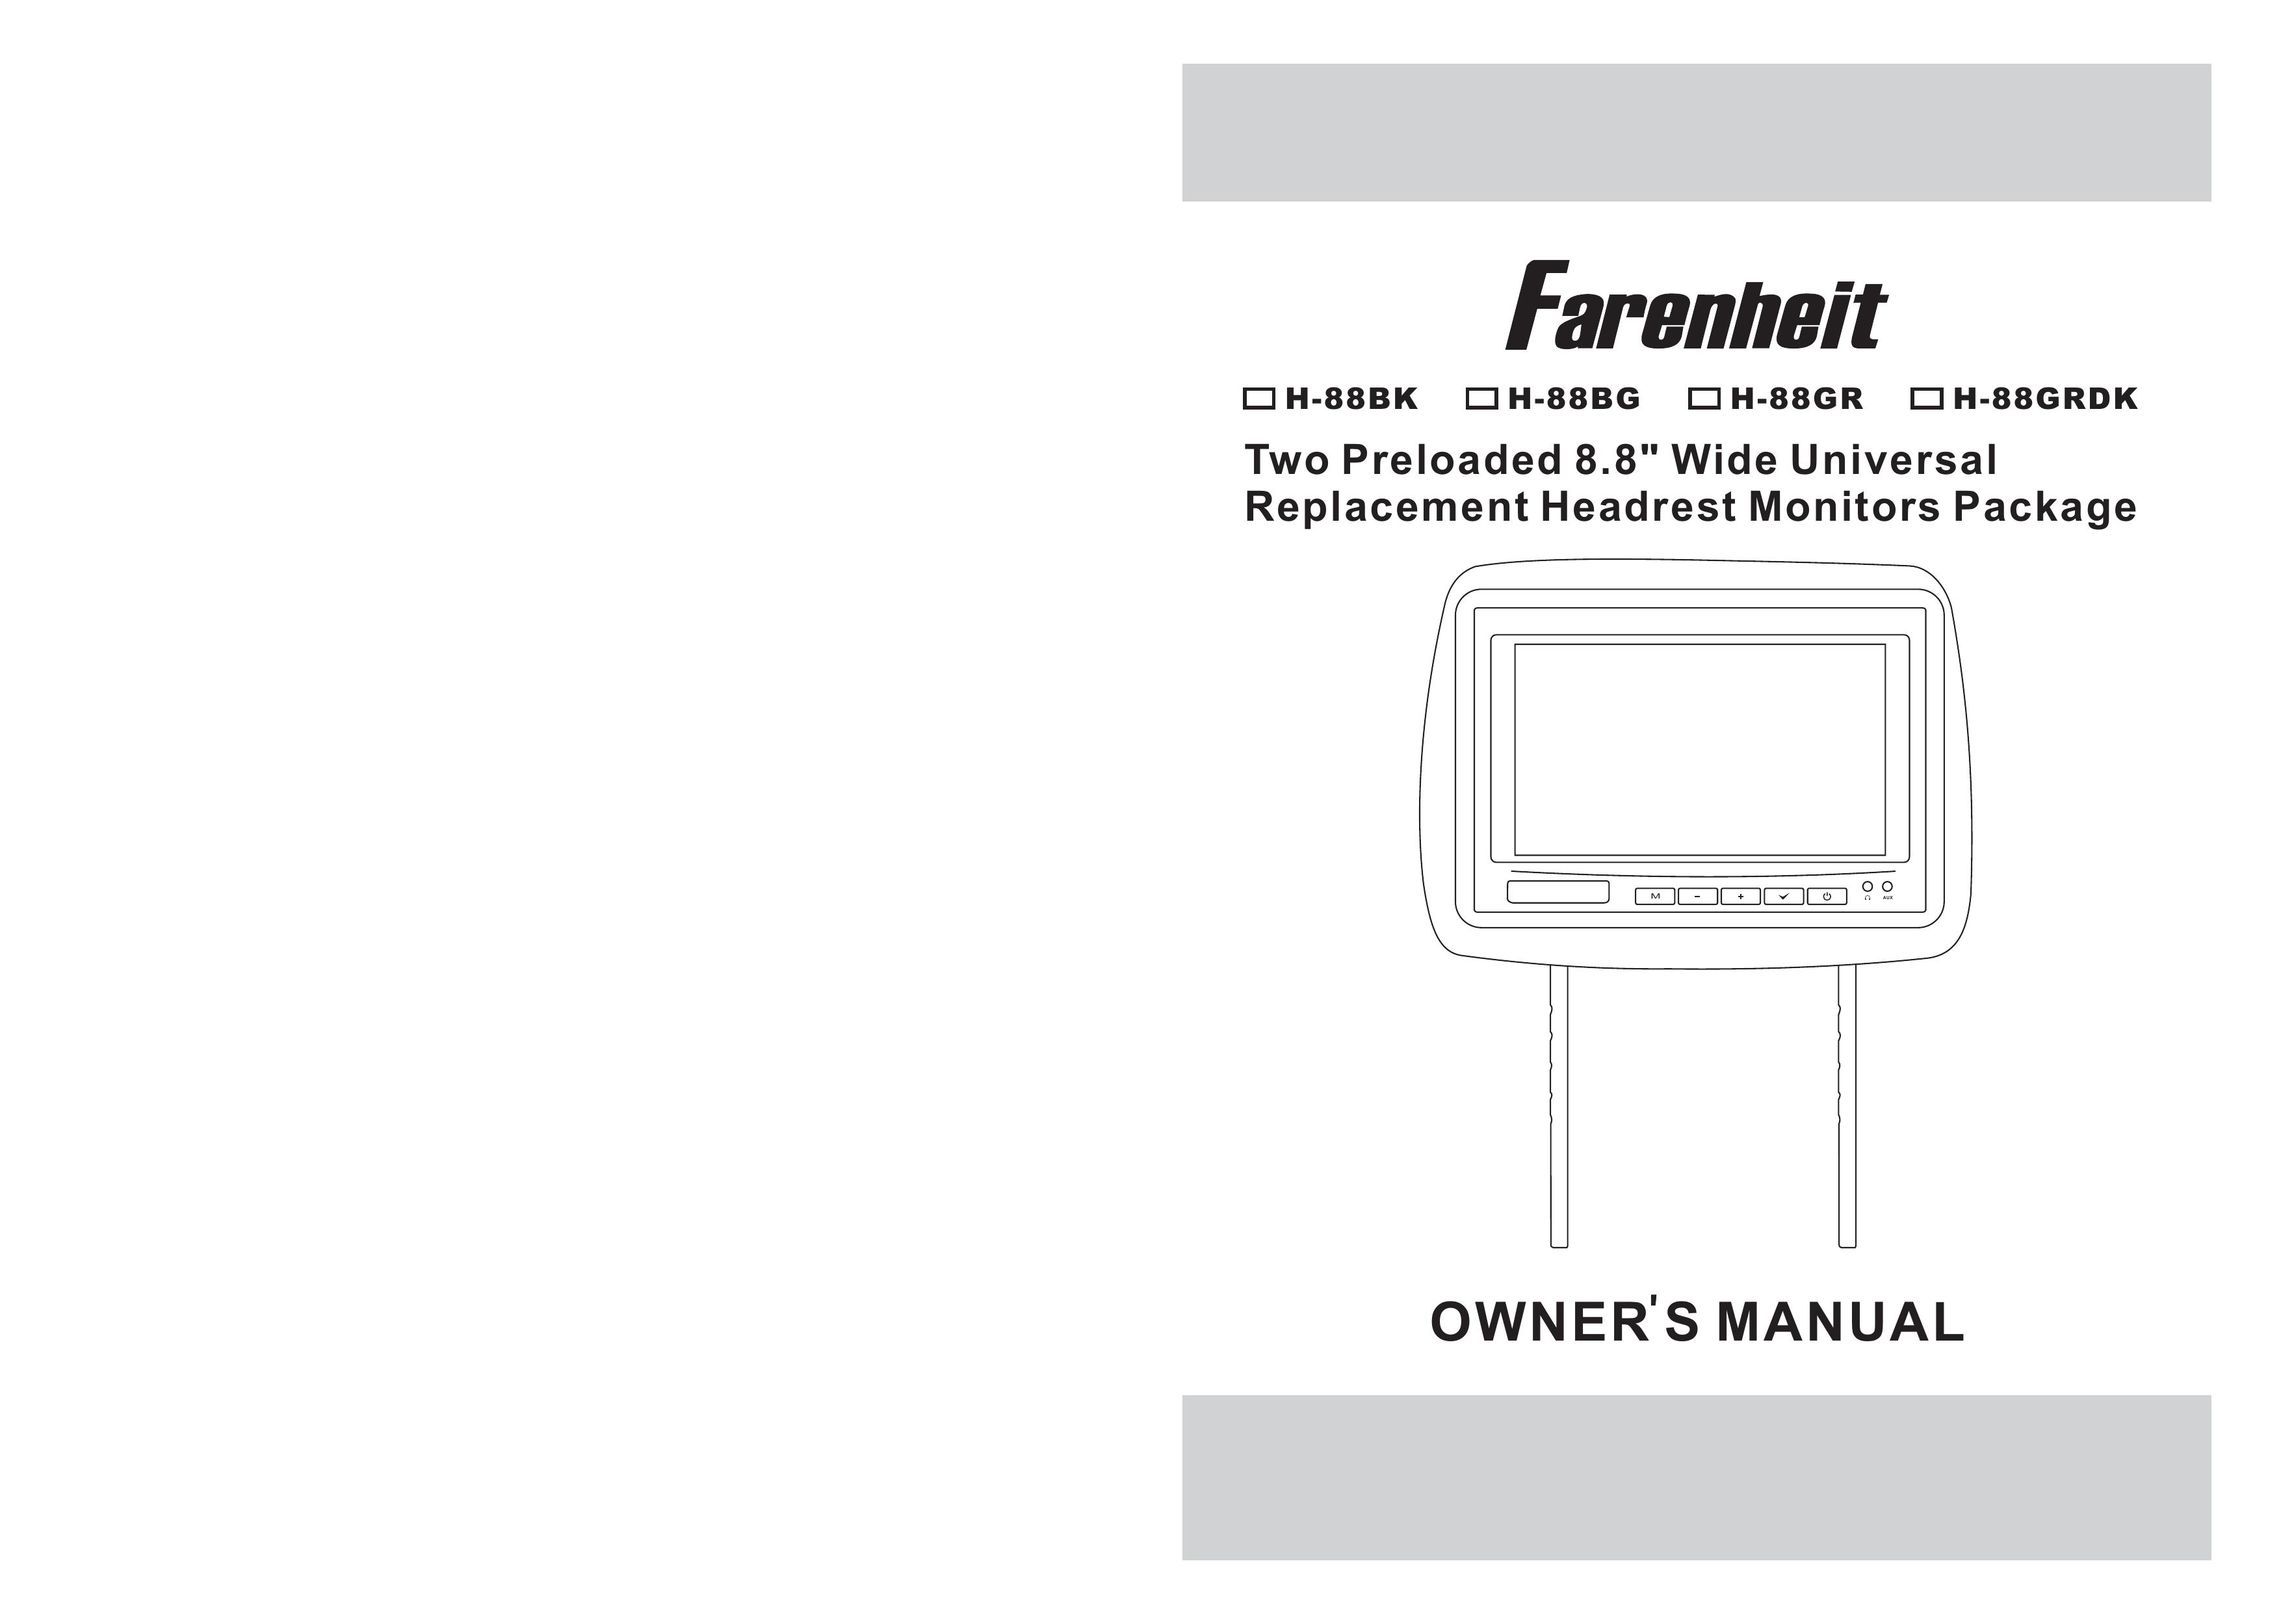 Farenheit Technologies H-88BG Car Video System User Manual